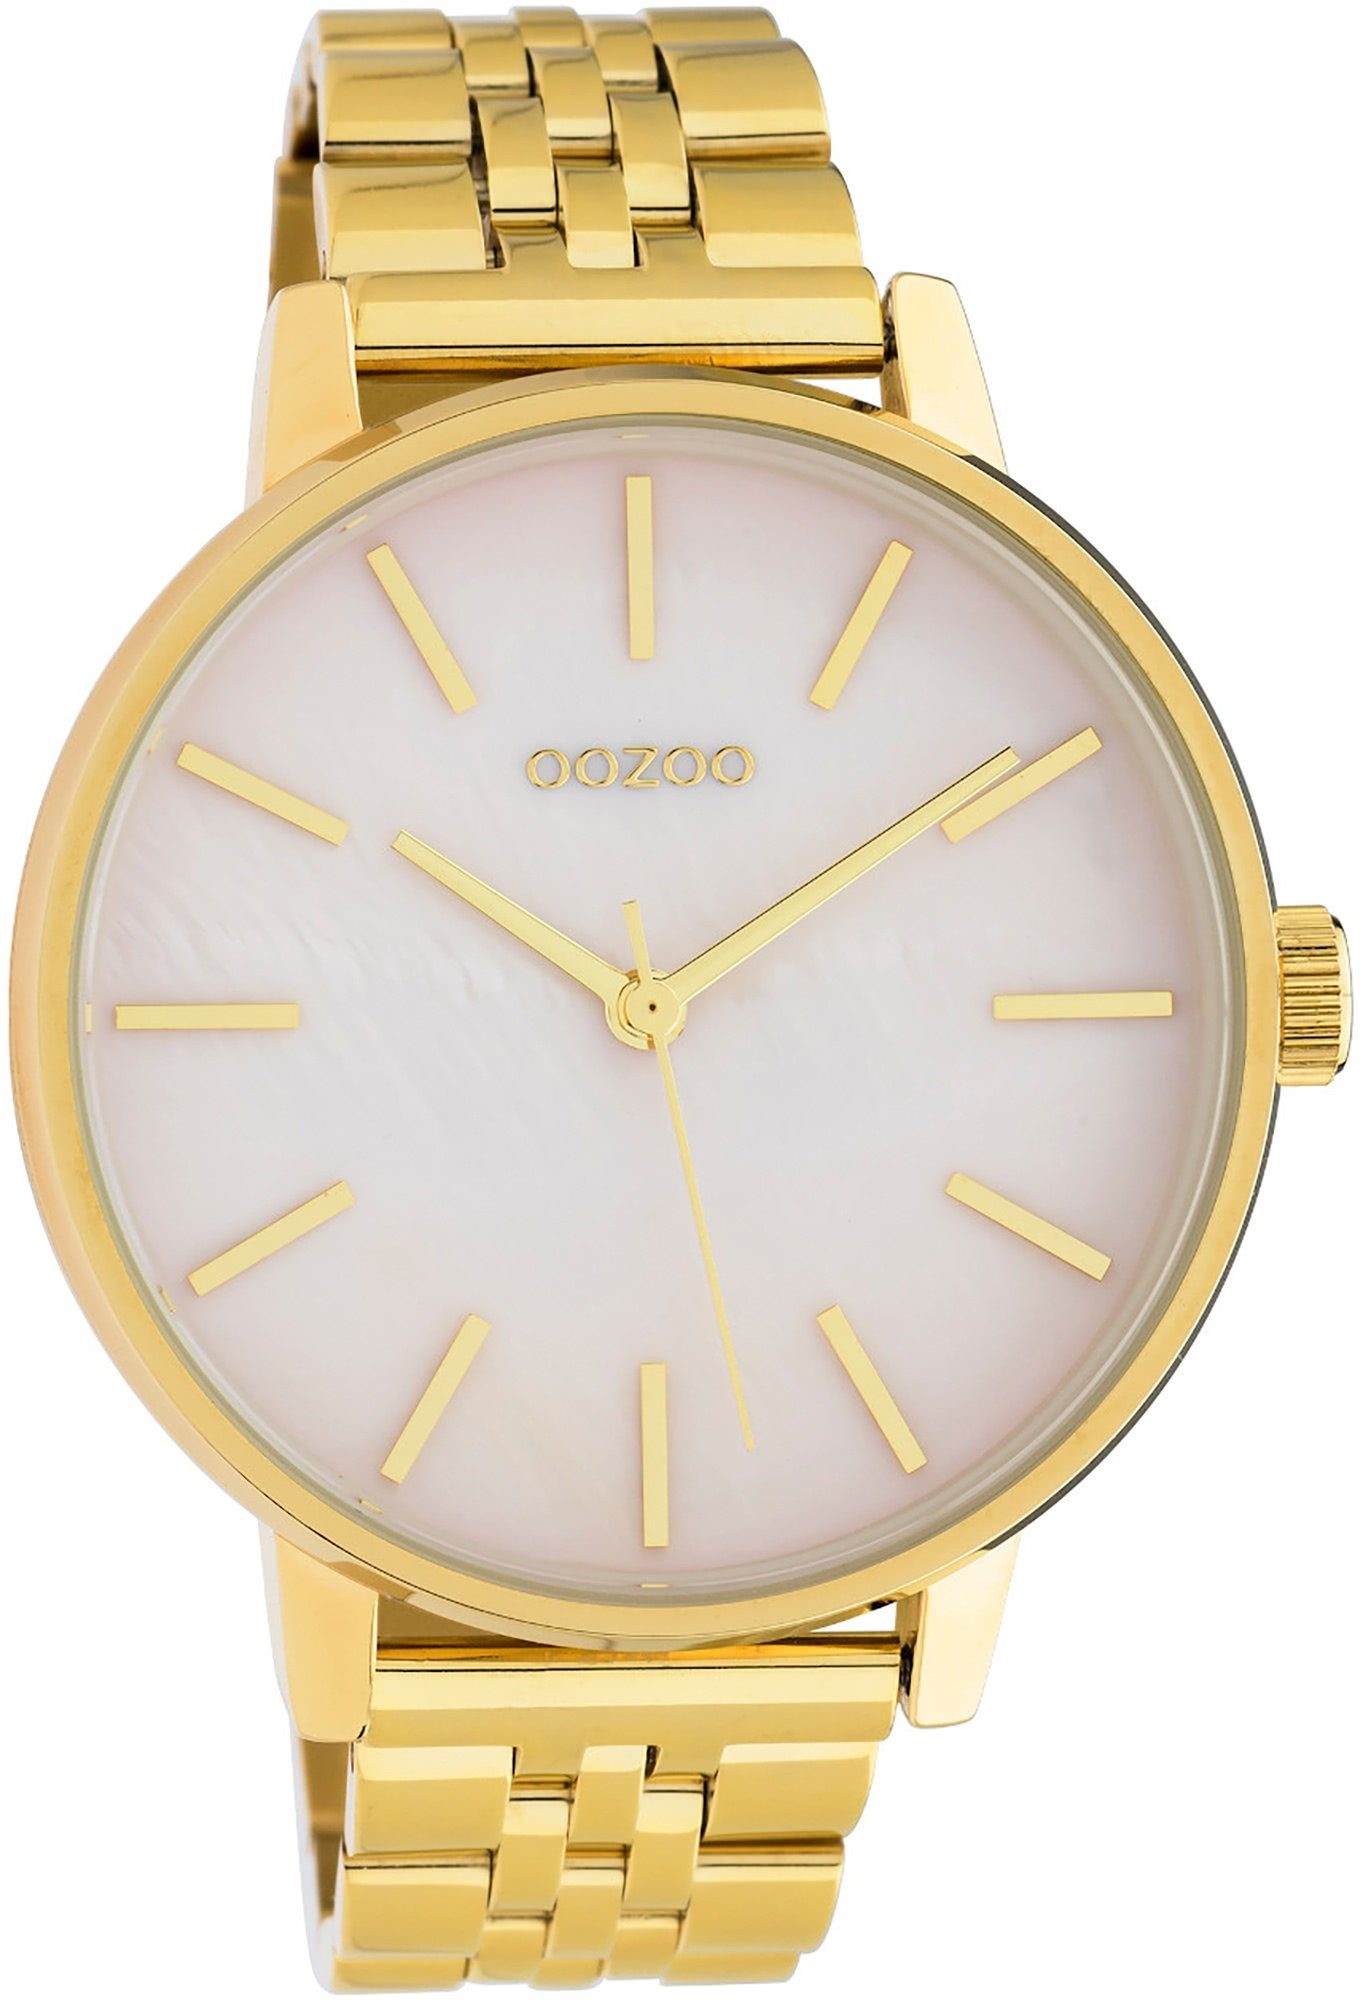 OOZOO Quarzuhr Oozoo Damen Armbanduhr gold Analog C10622, Damenuhr rund,  groß (ca. 40mm) Edelstahlarmband, Fashion-Style | Quarzuhren